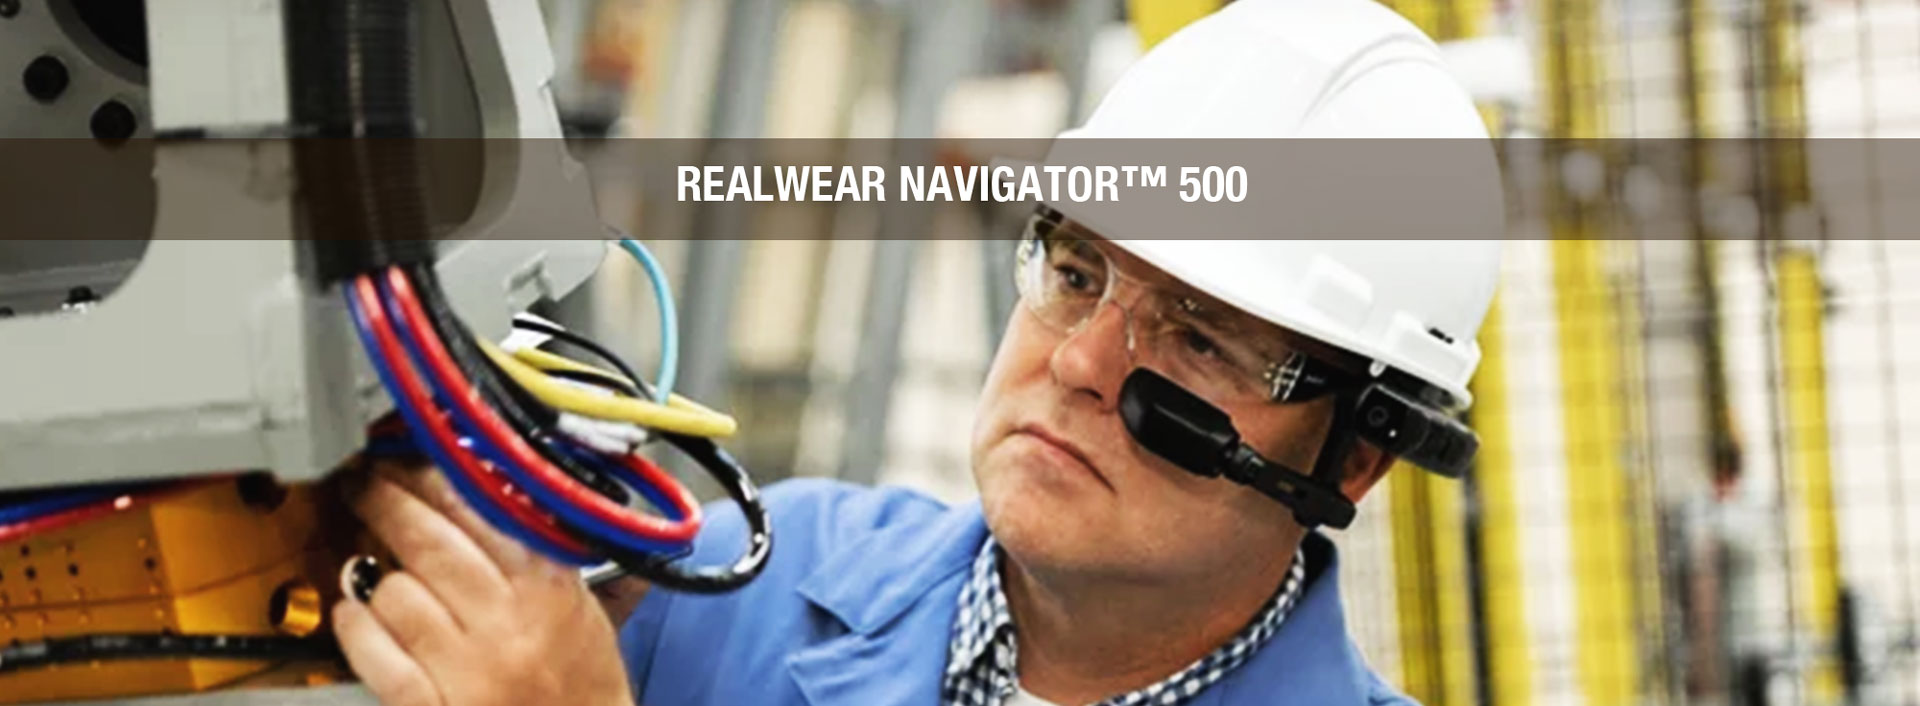 Realwear Navigator 500